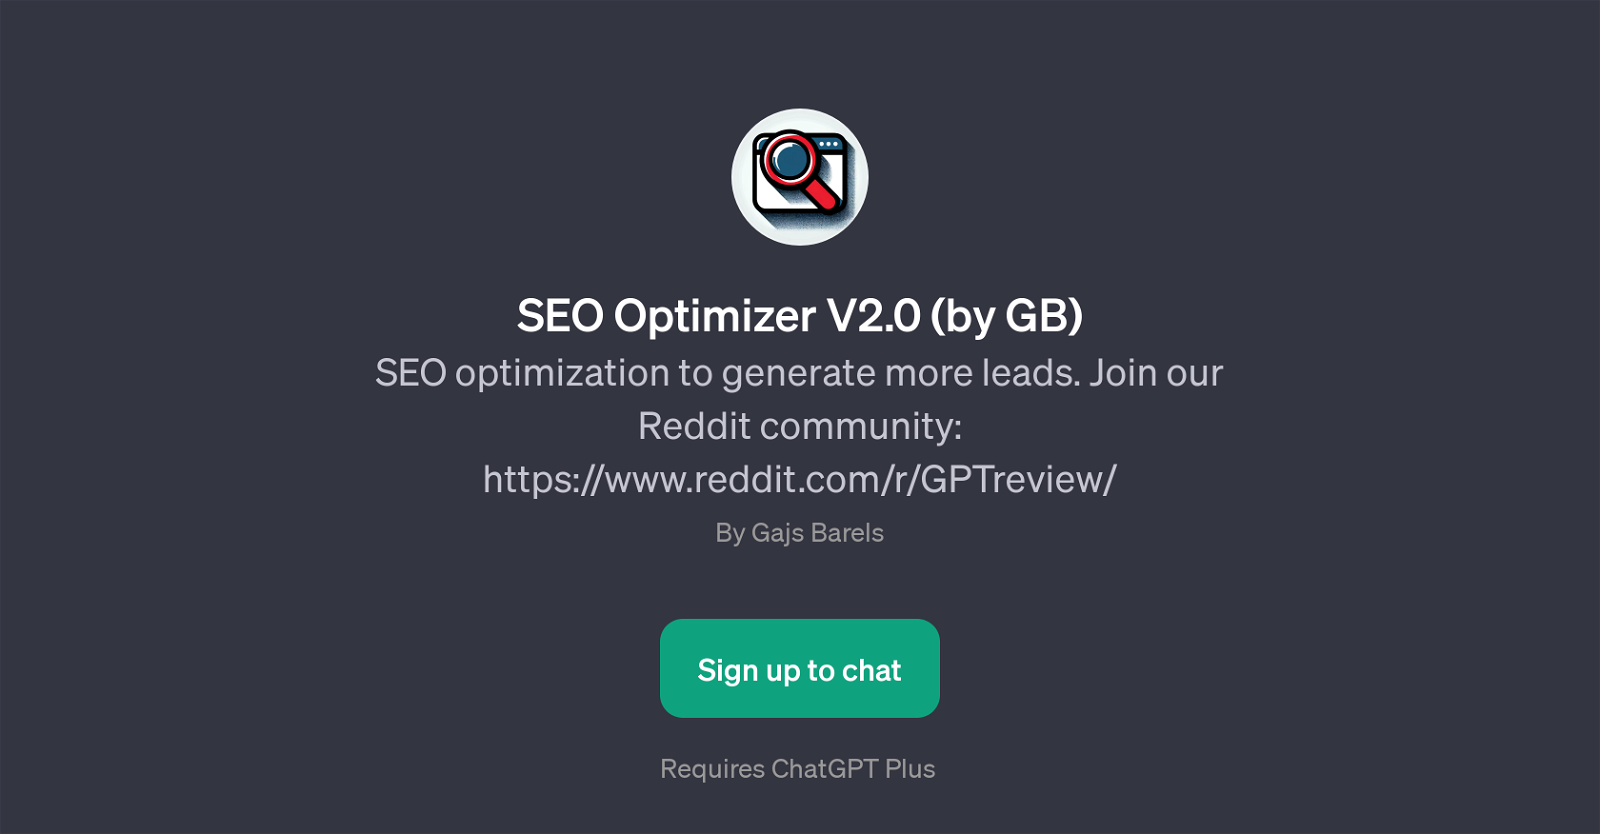 SEO Optimizer V2.0 (by GB) website